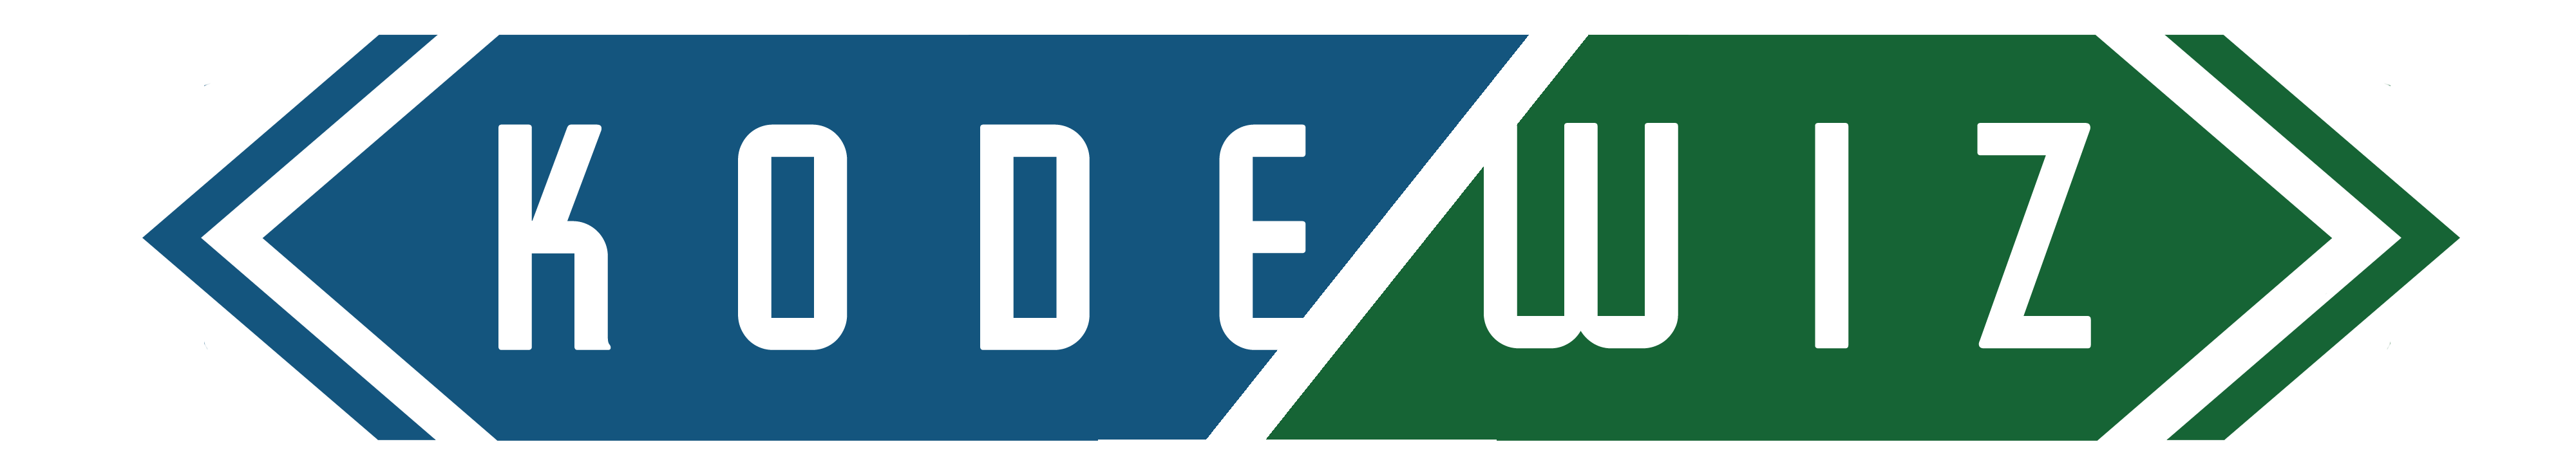 kodewiz logo